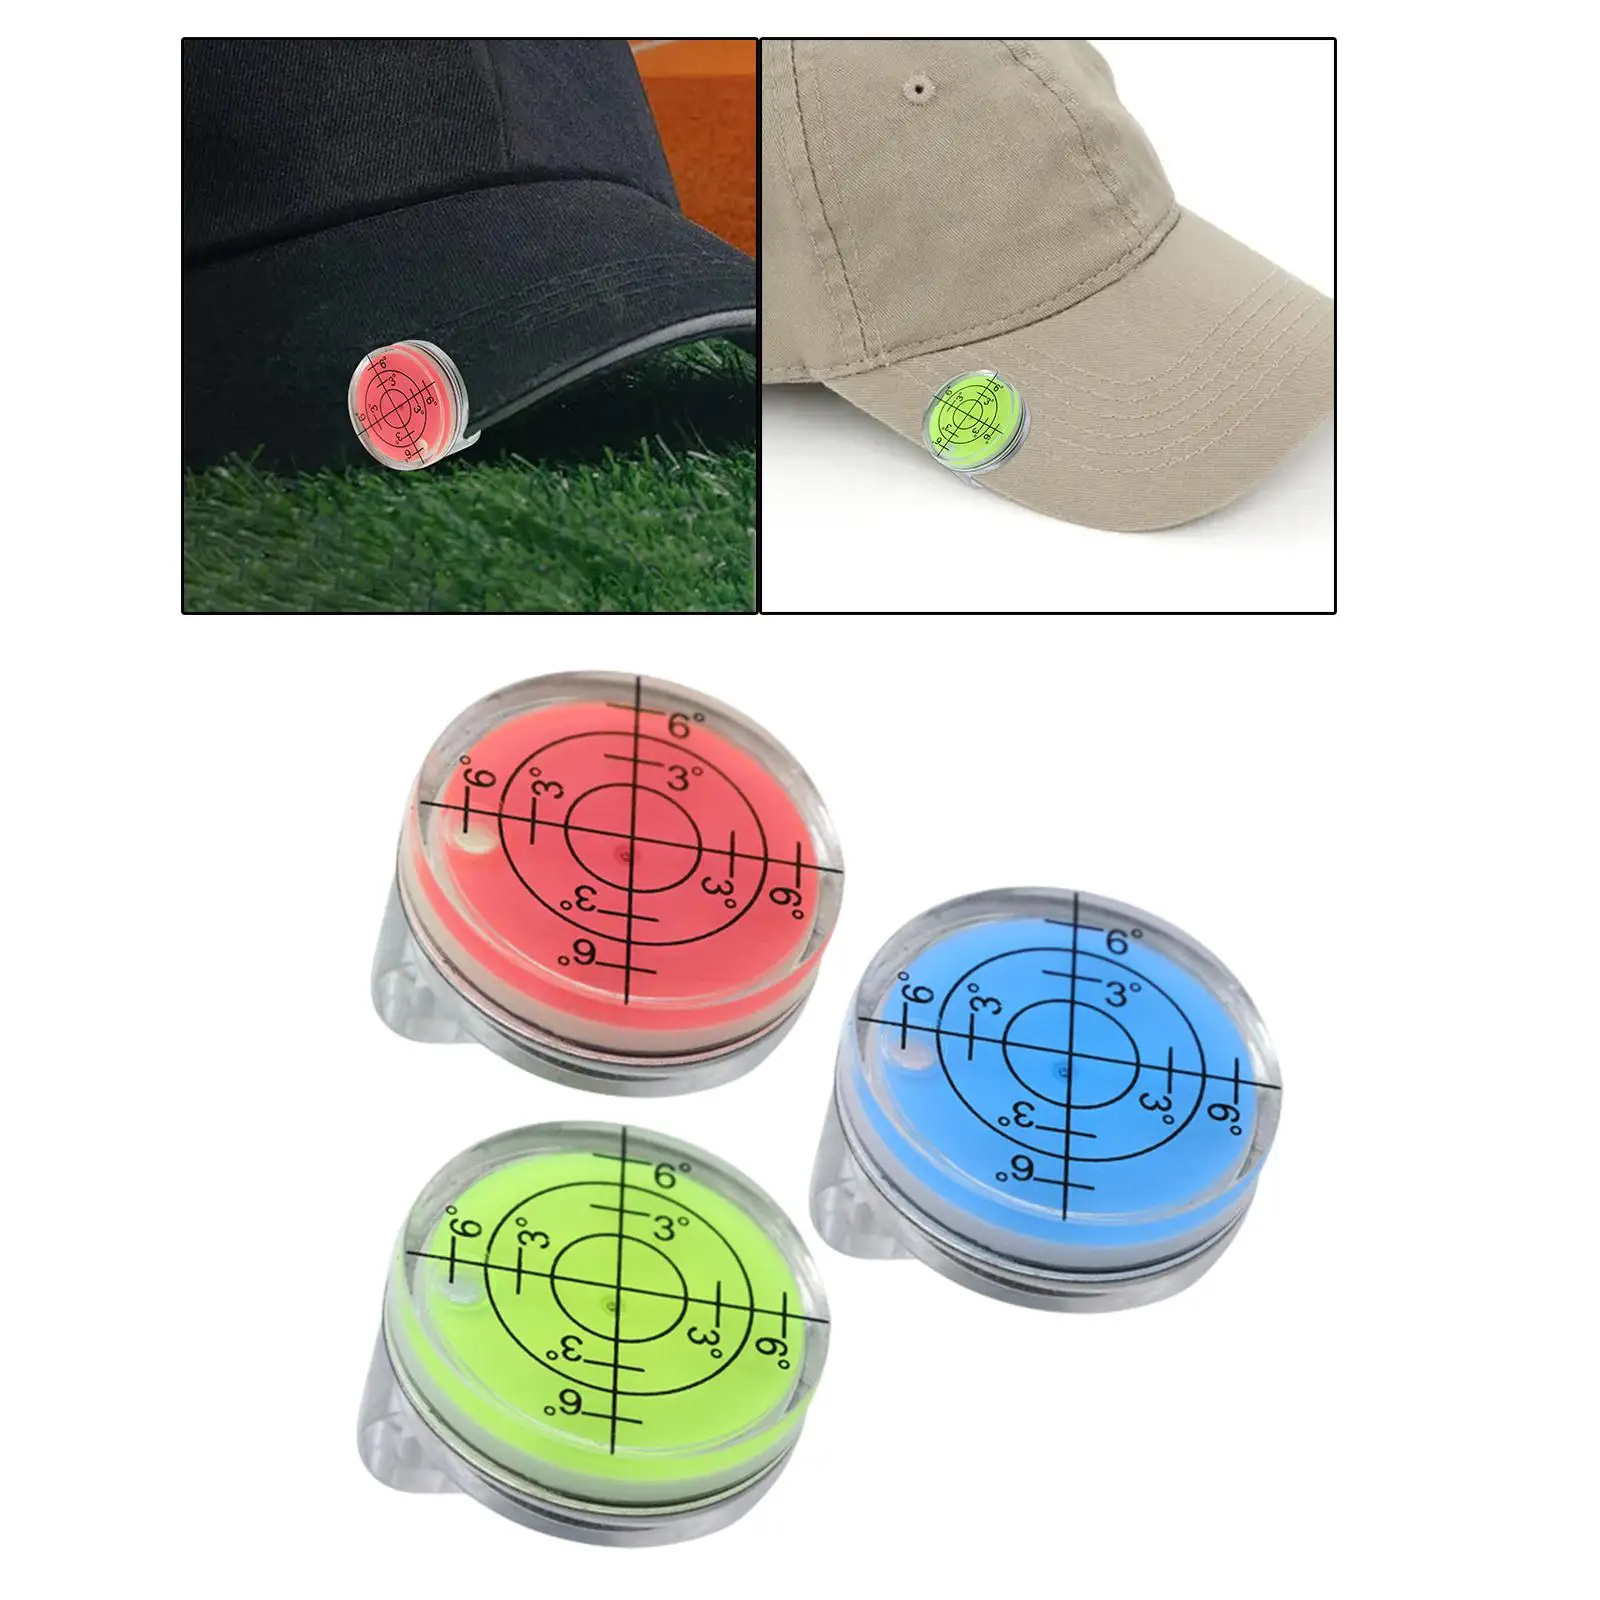 Golf Hat Clip Ball Marker Stylish Men Women Golf Course Accessories Golf Putting Aid Reader Ball Mark Cap Clip with Ball Marker